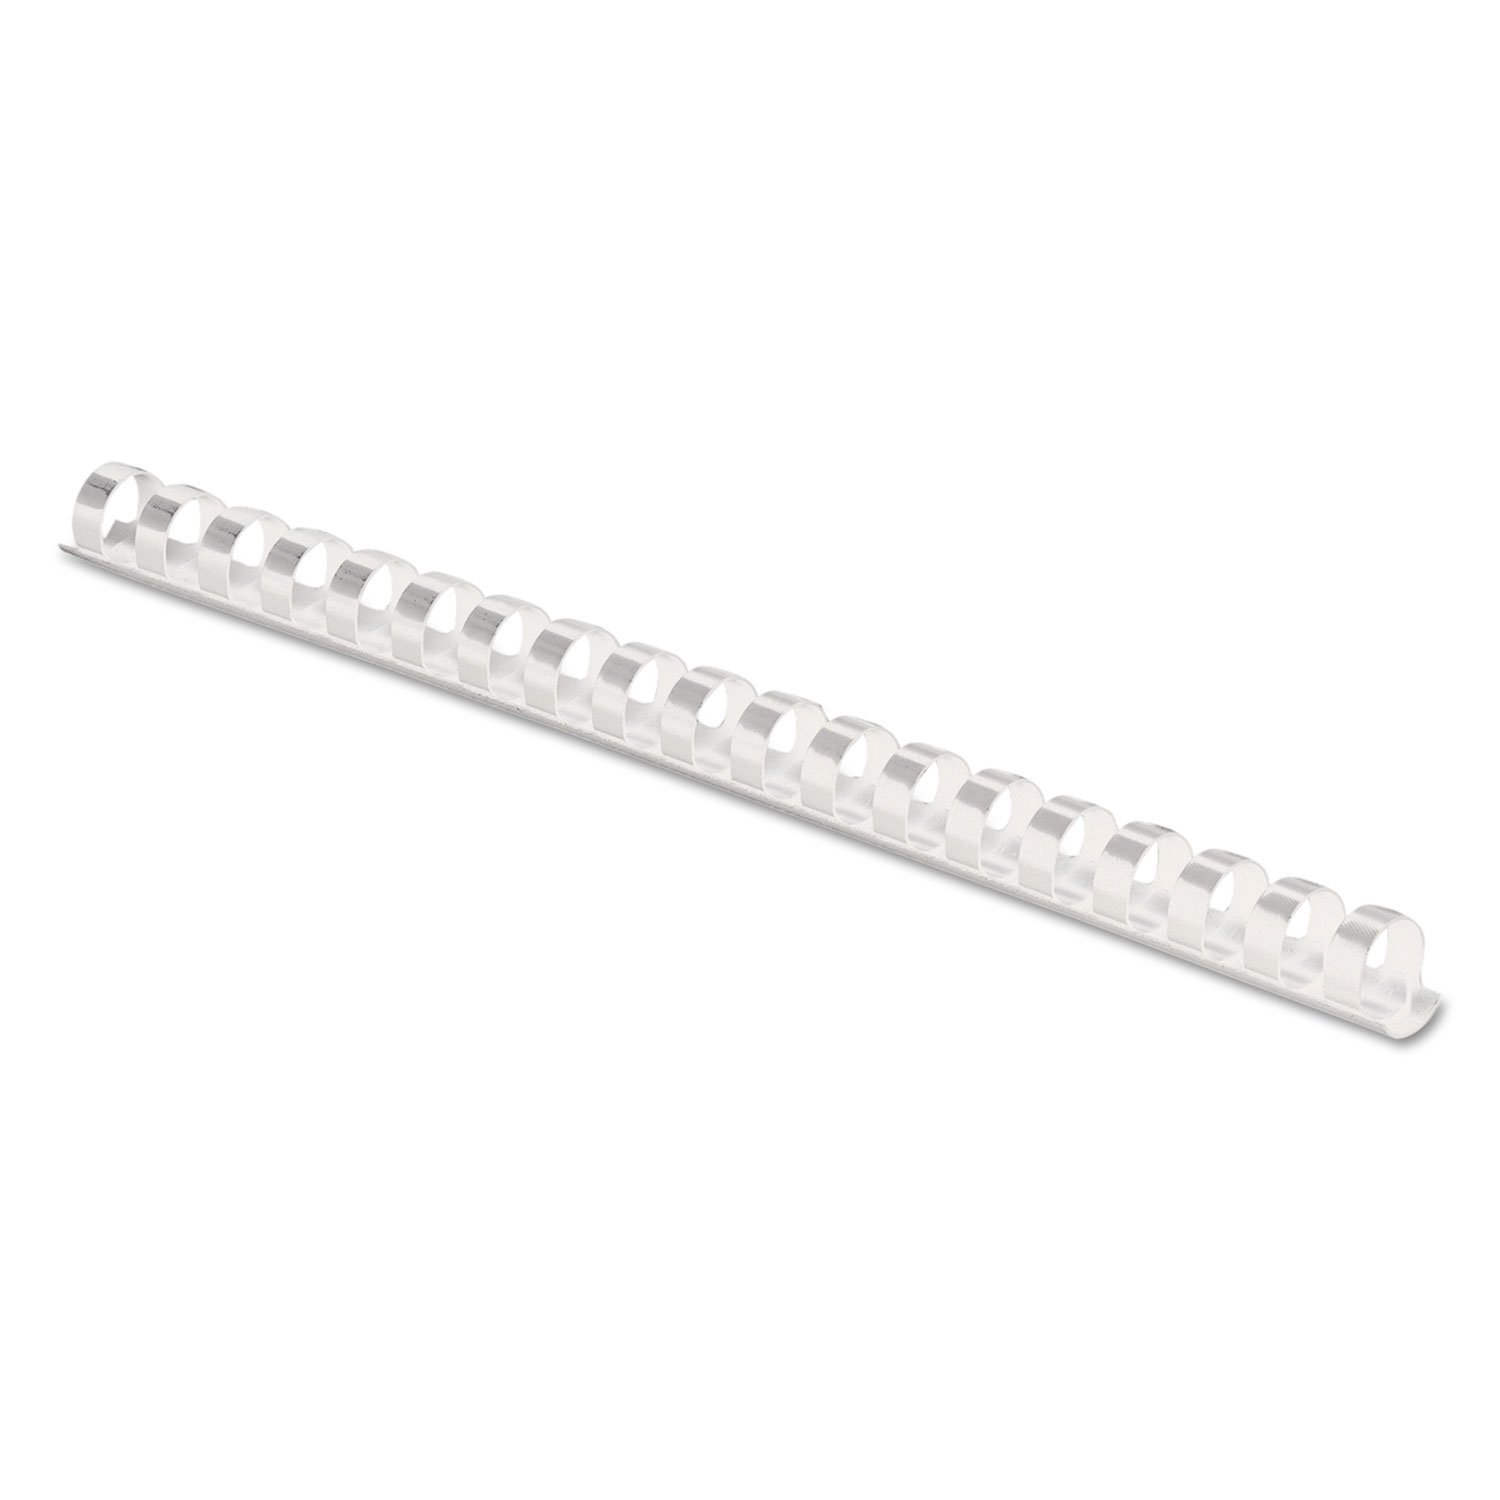 Plastic Comb Bindings, 1/2 Diameter, 90 Sheet Capacity, White, 100 Combs/Pack